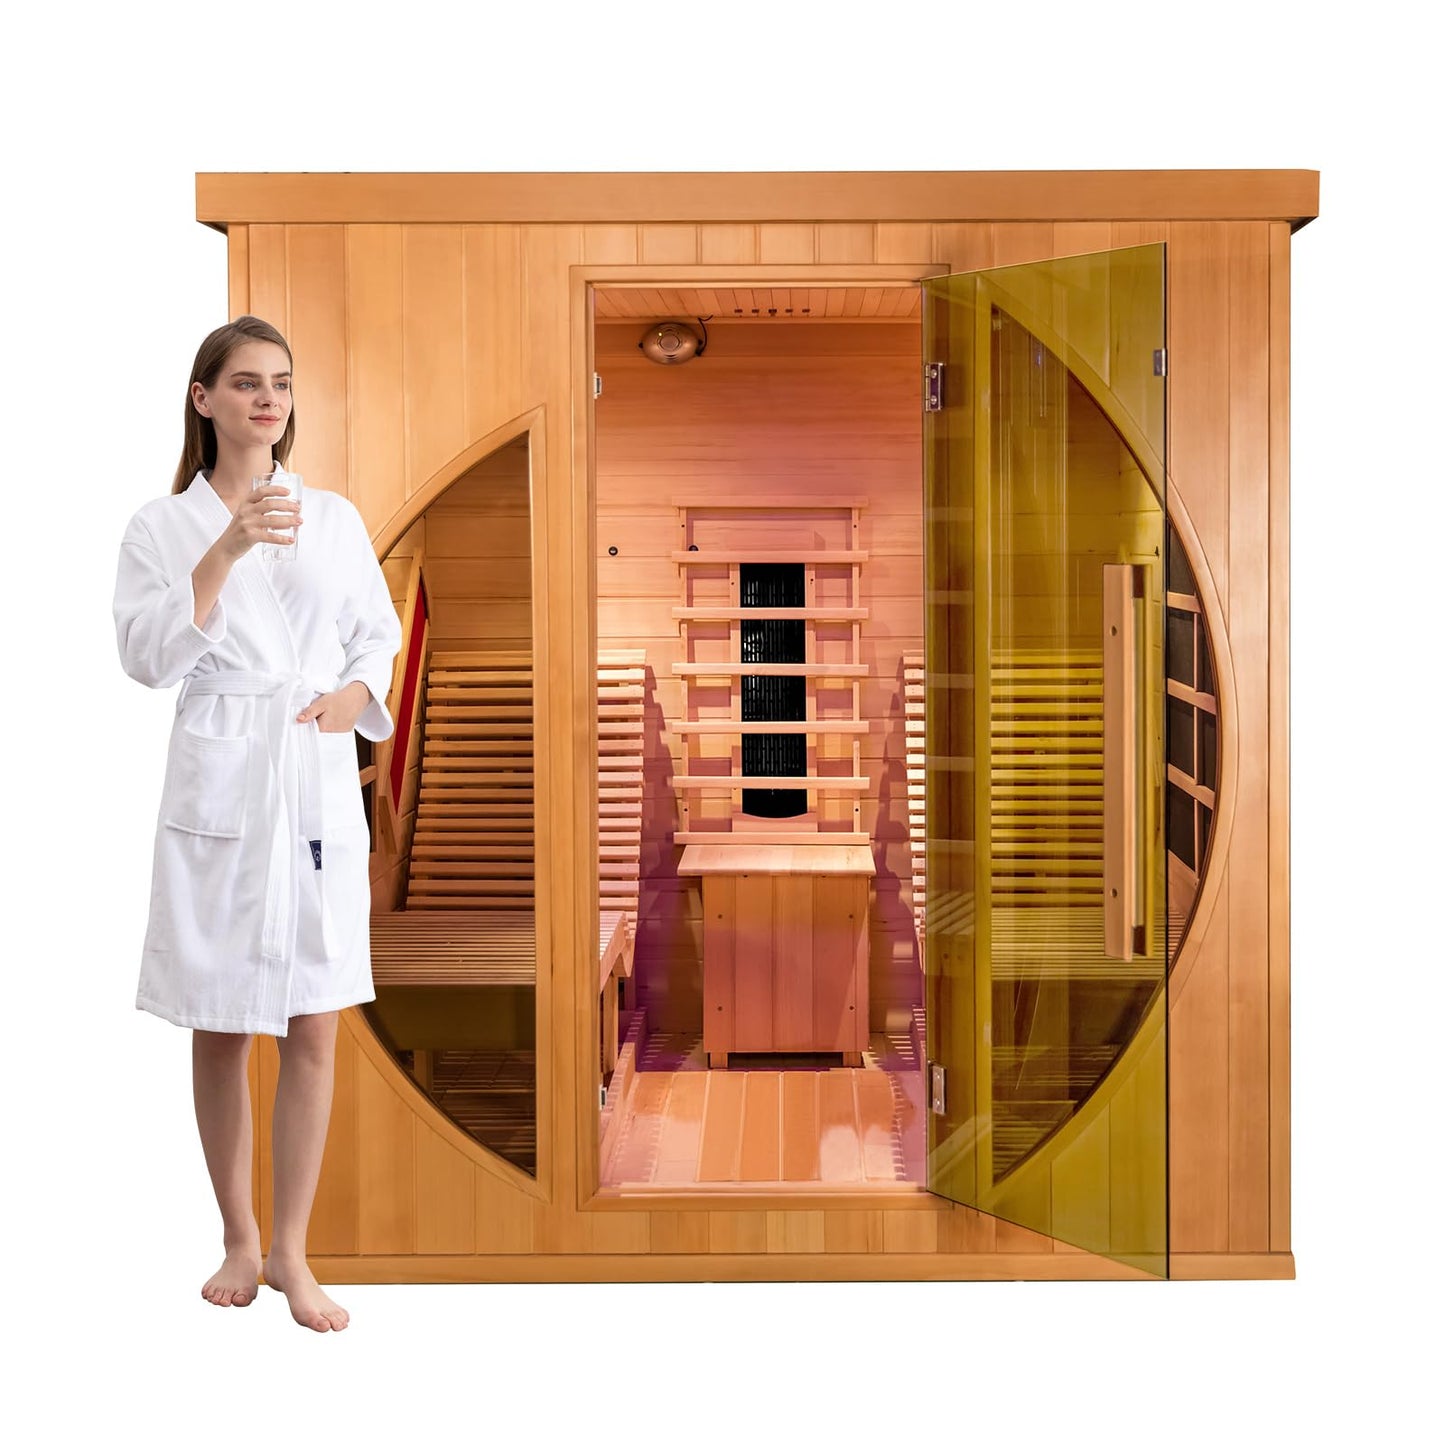 ZONEMEL Far Infrared 2 Person Wooden Sauna Room with Recliner, Red Cedar Luxury Indoor Sauna with 9 Heating Panels, Oxygen Bar, 3400 Watt, Infrared